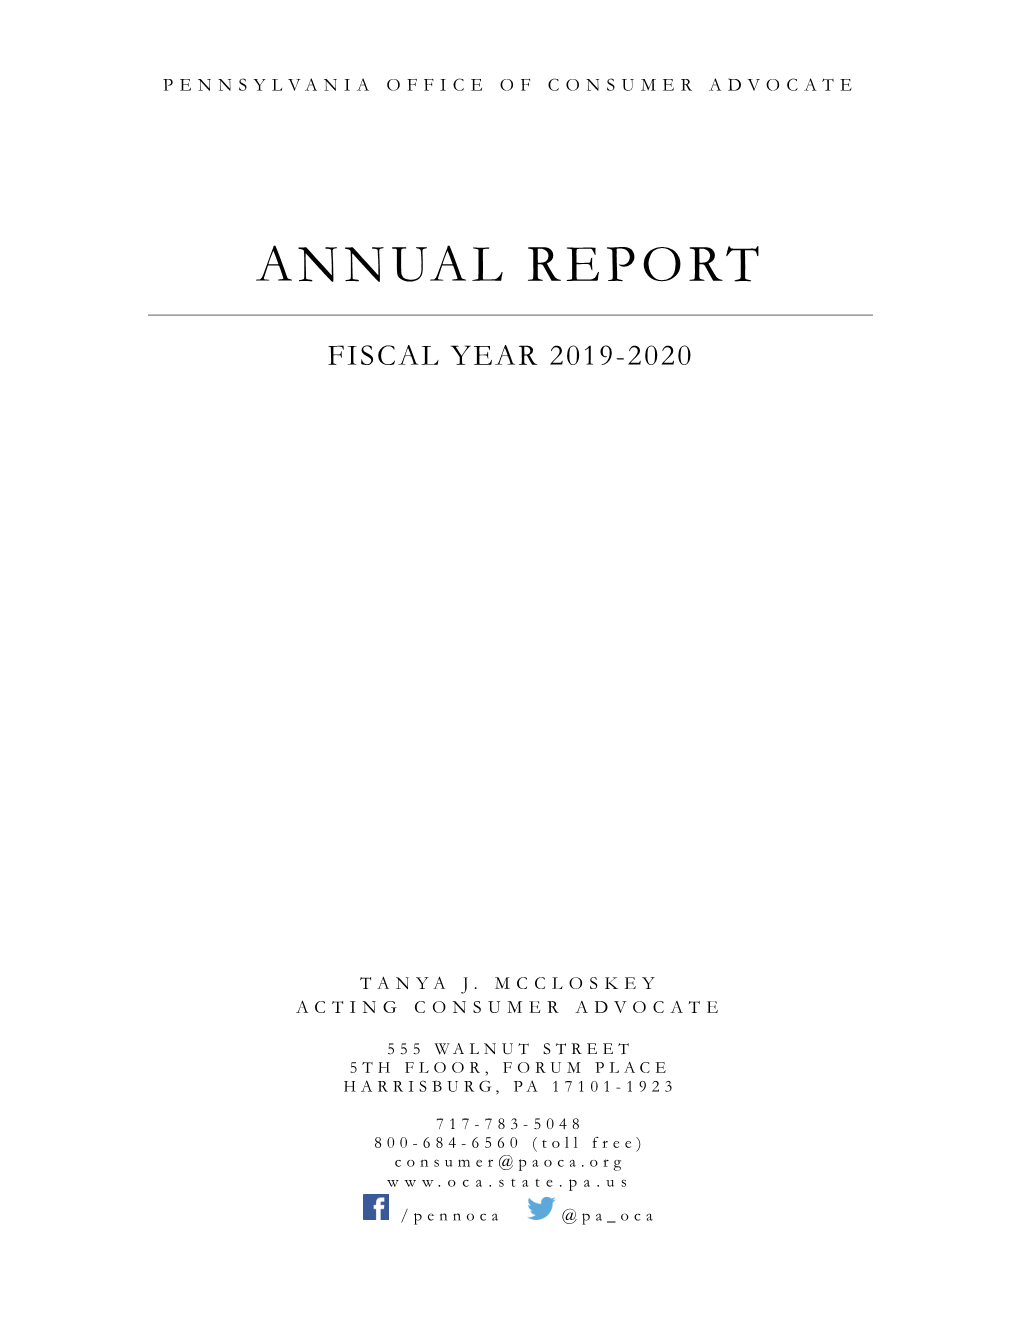 OCA Annual Report 2019-2020